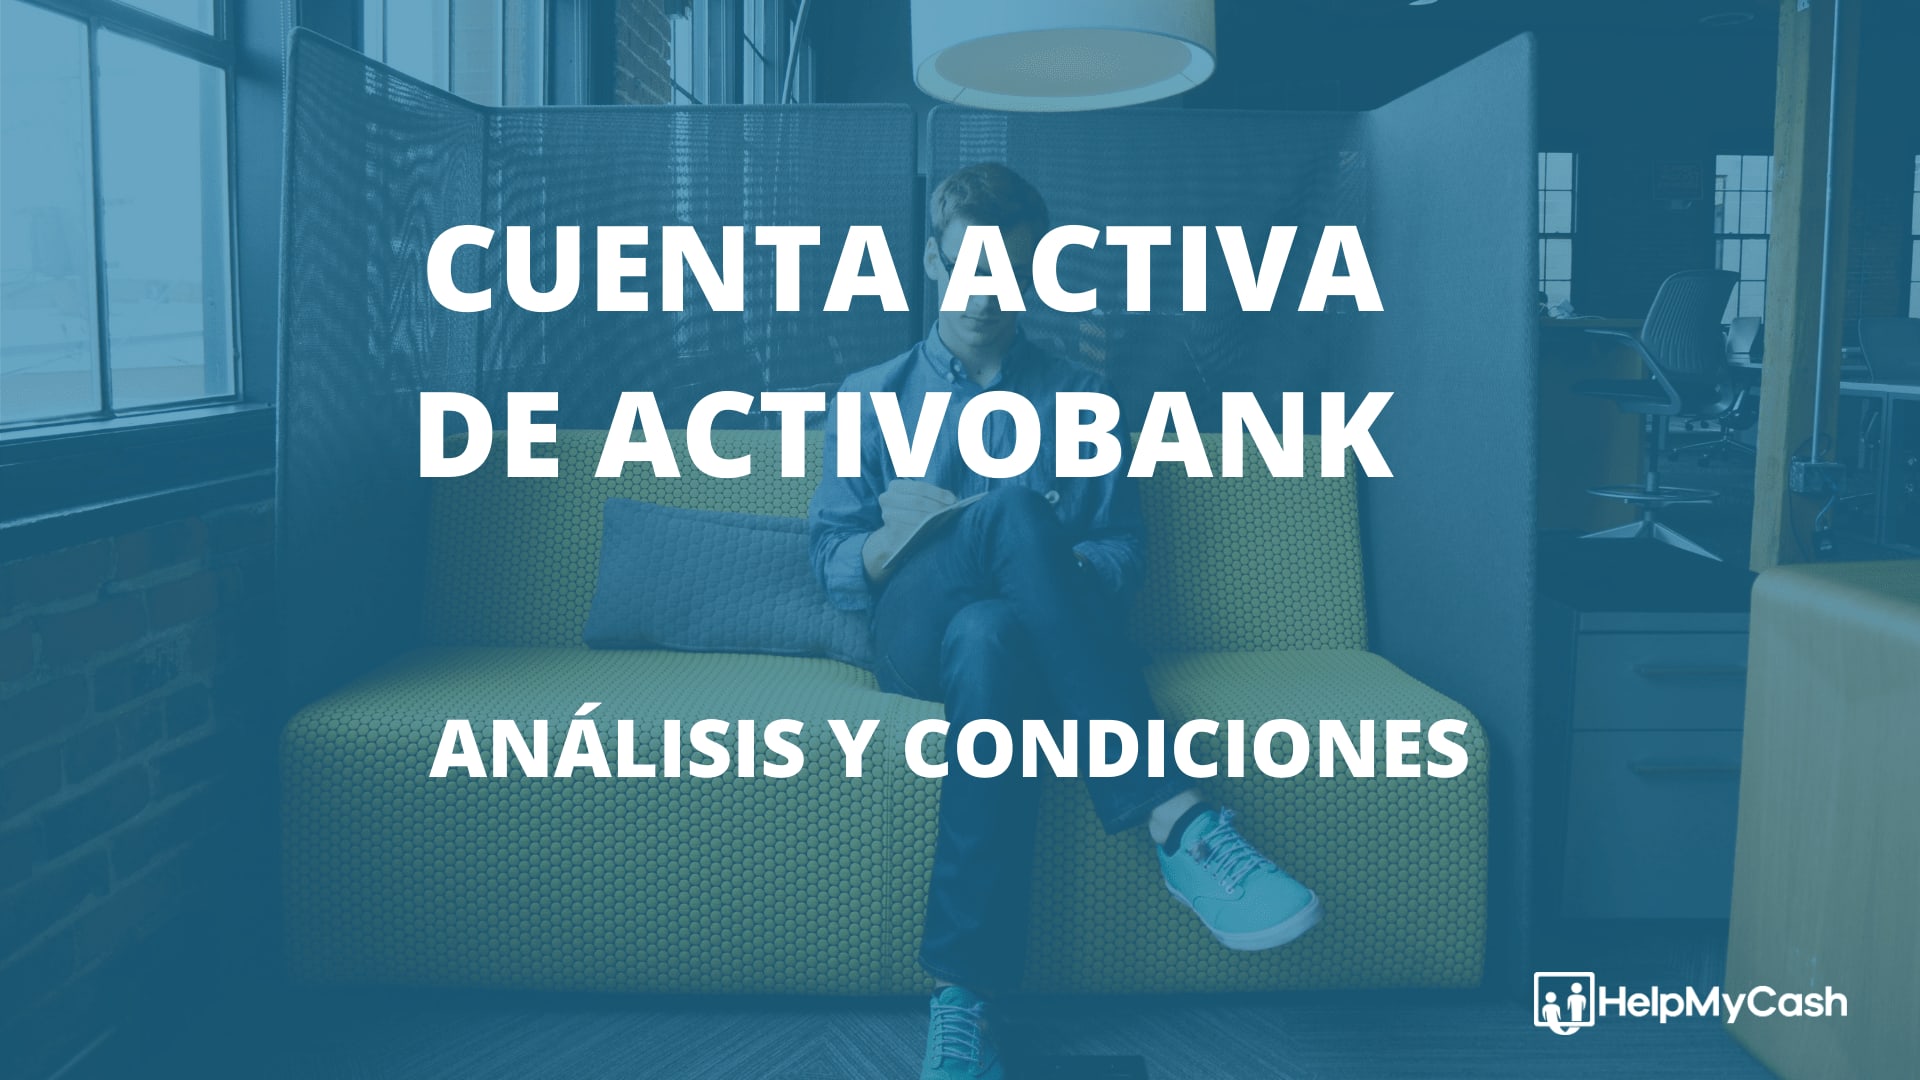 Cuenta activobank. cuenta activa. cuenta activa de activobank